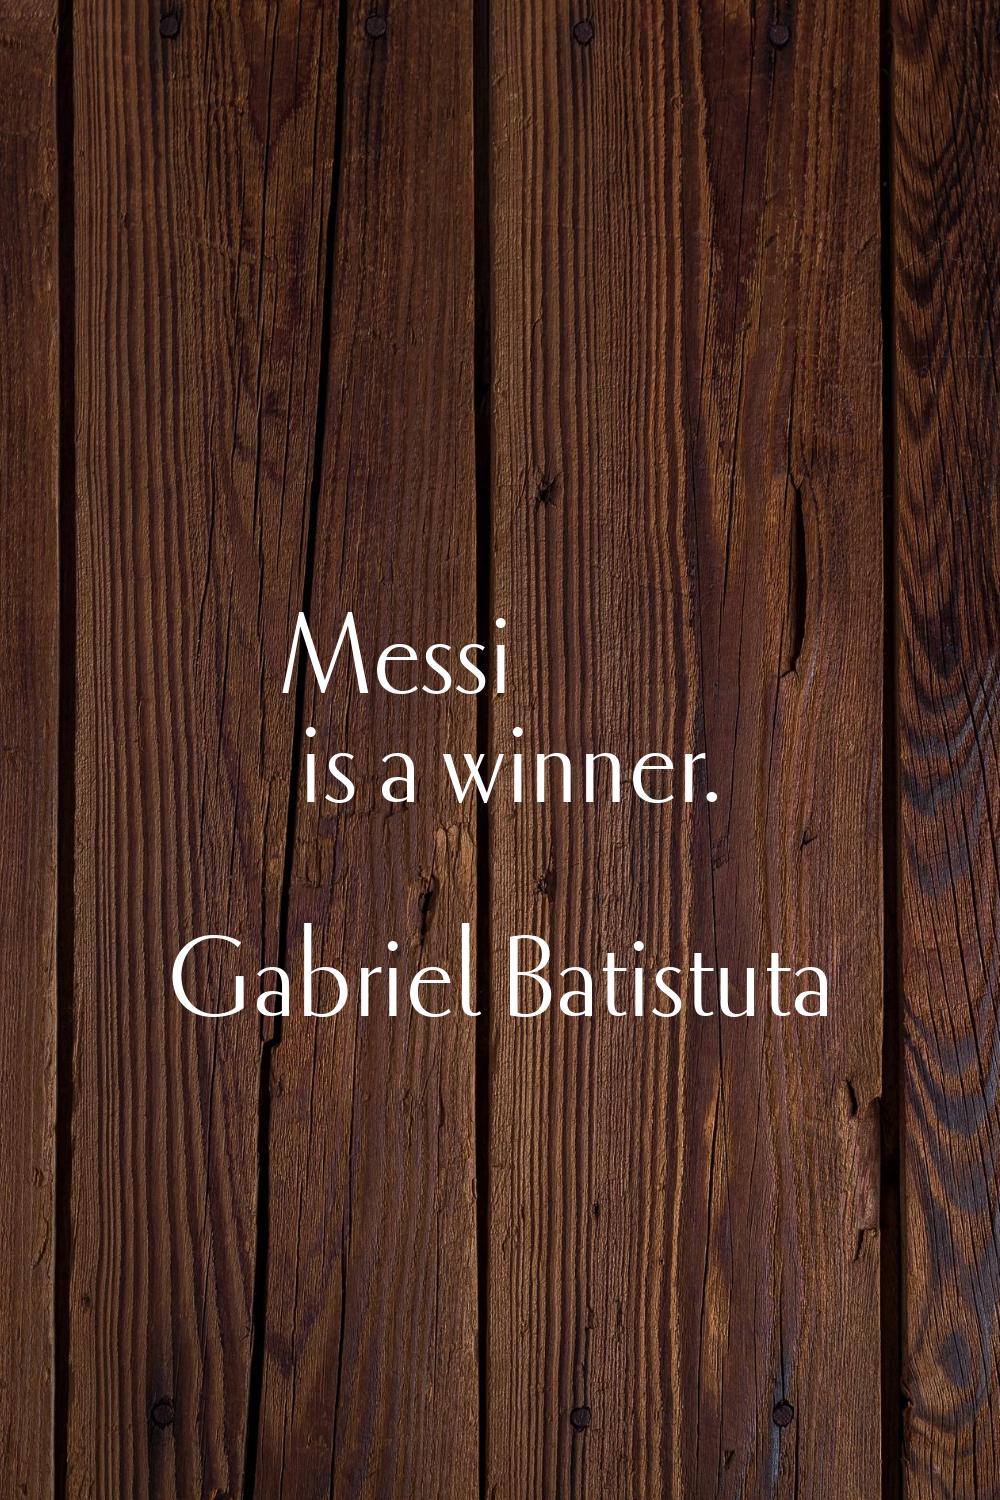 Messi is a winner.